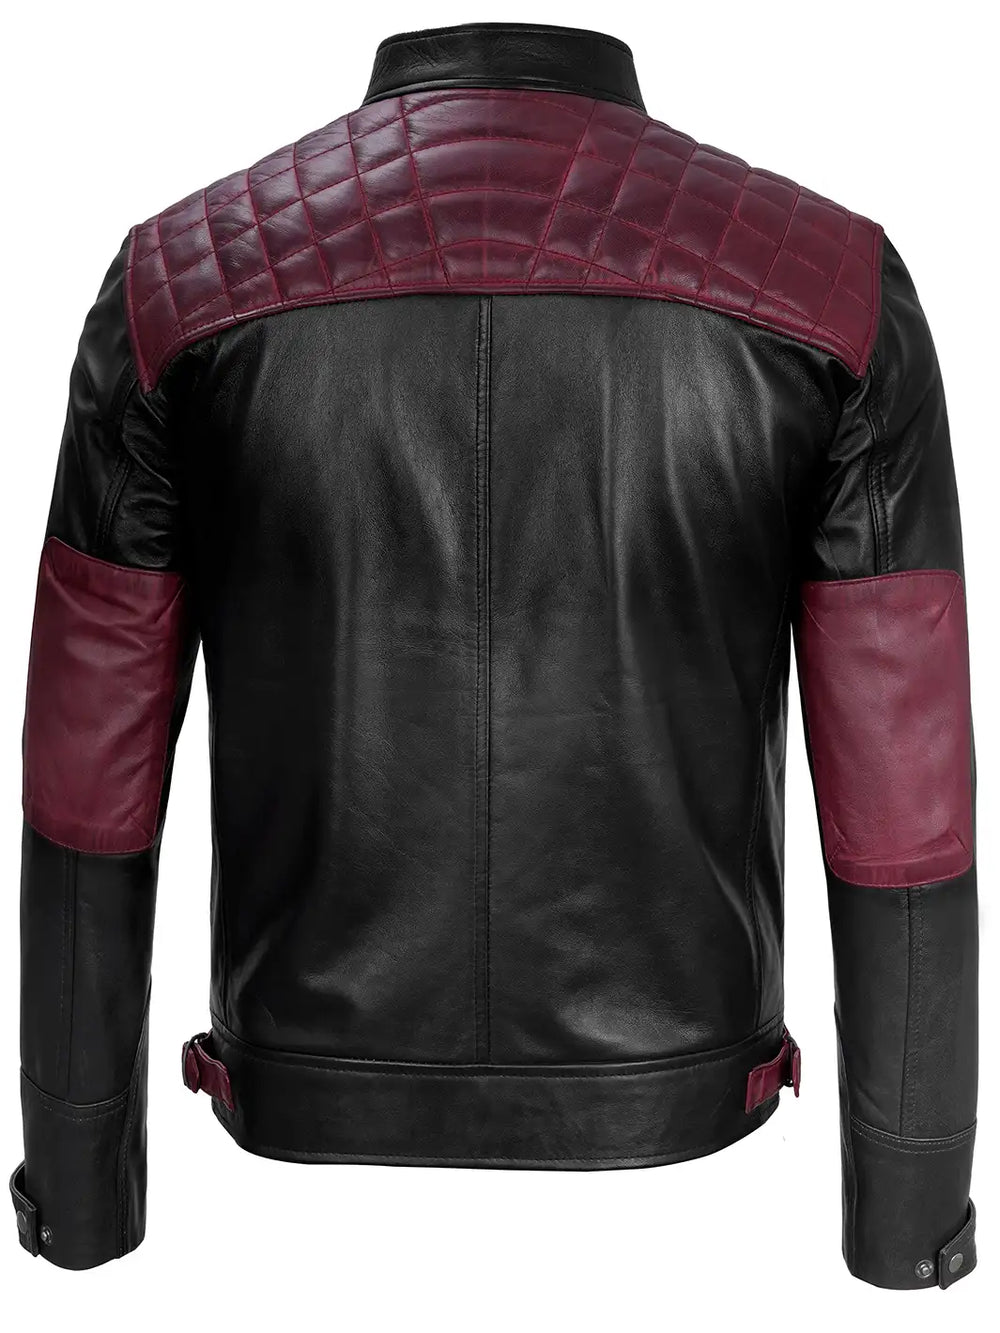 Cafe racer leather jacket